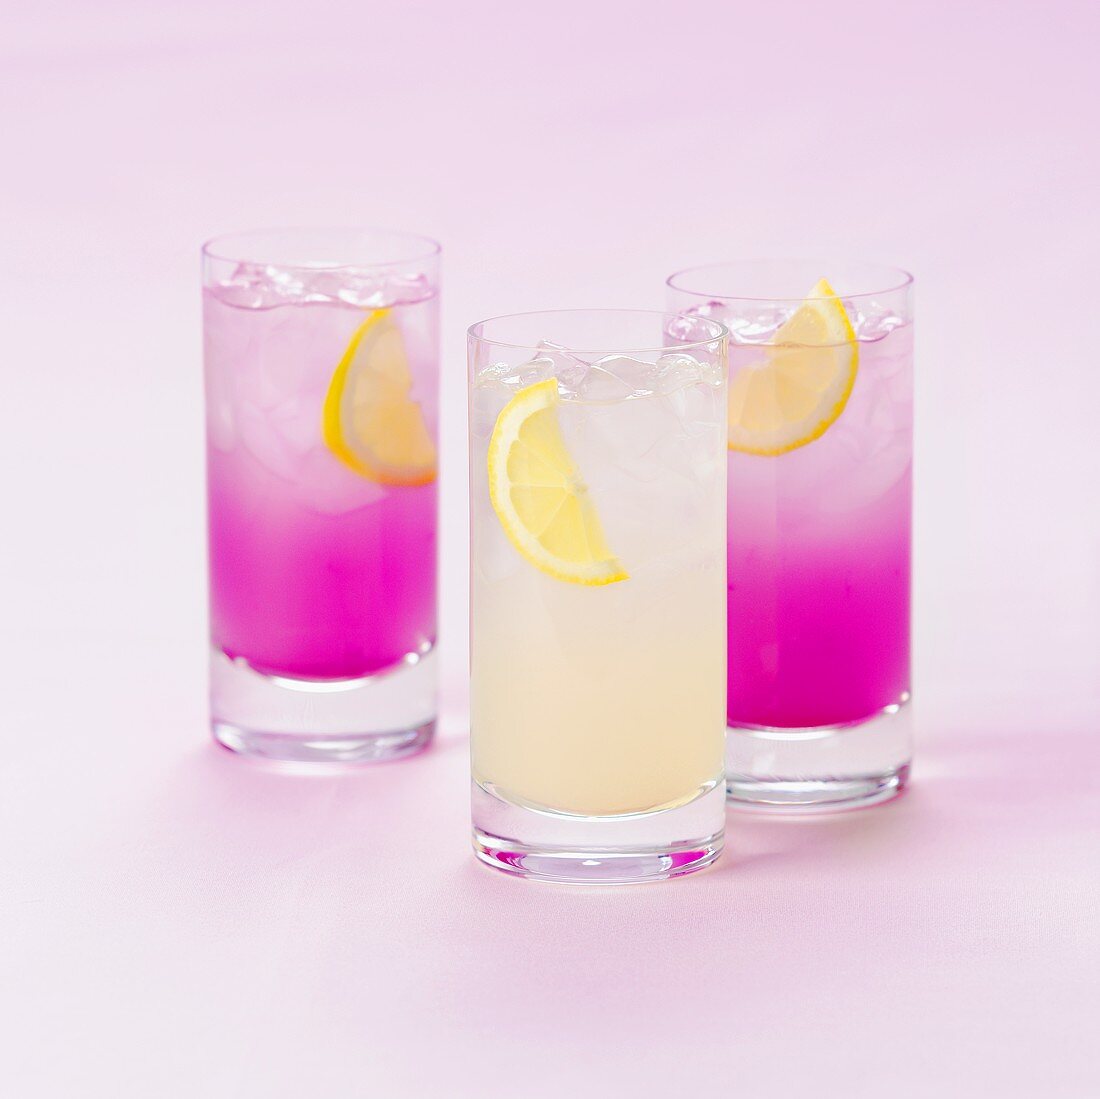 Three glasses of soft drinks with lemon